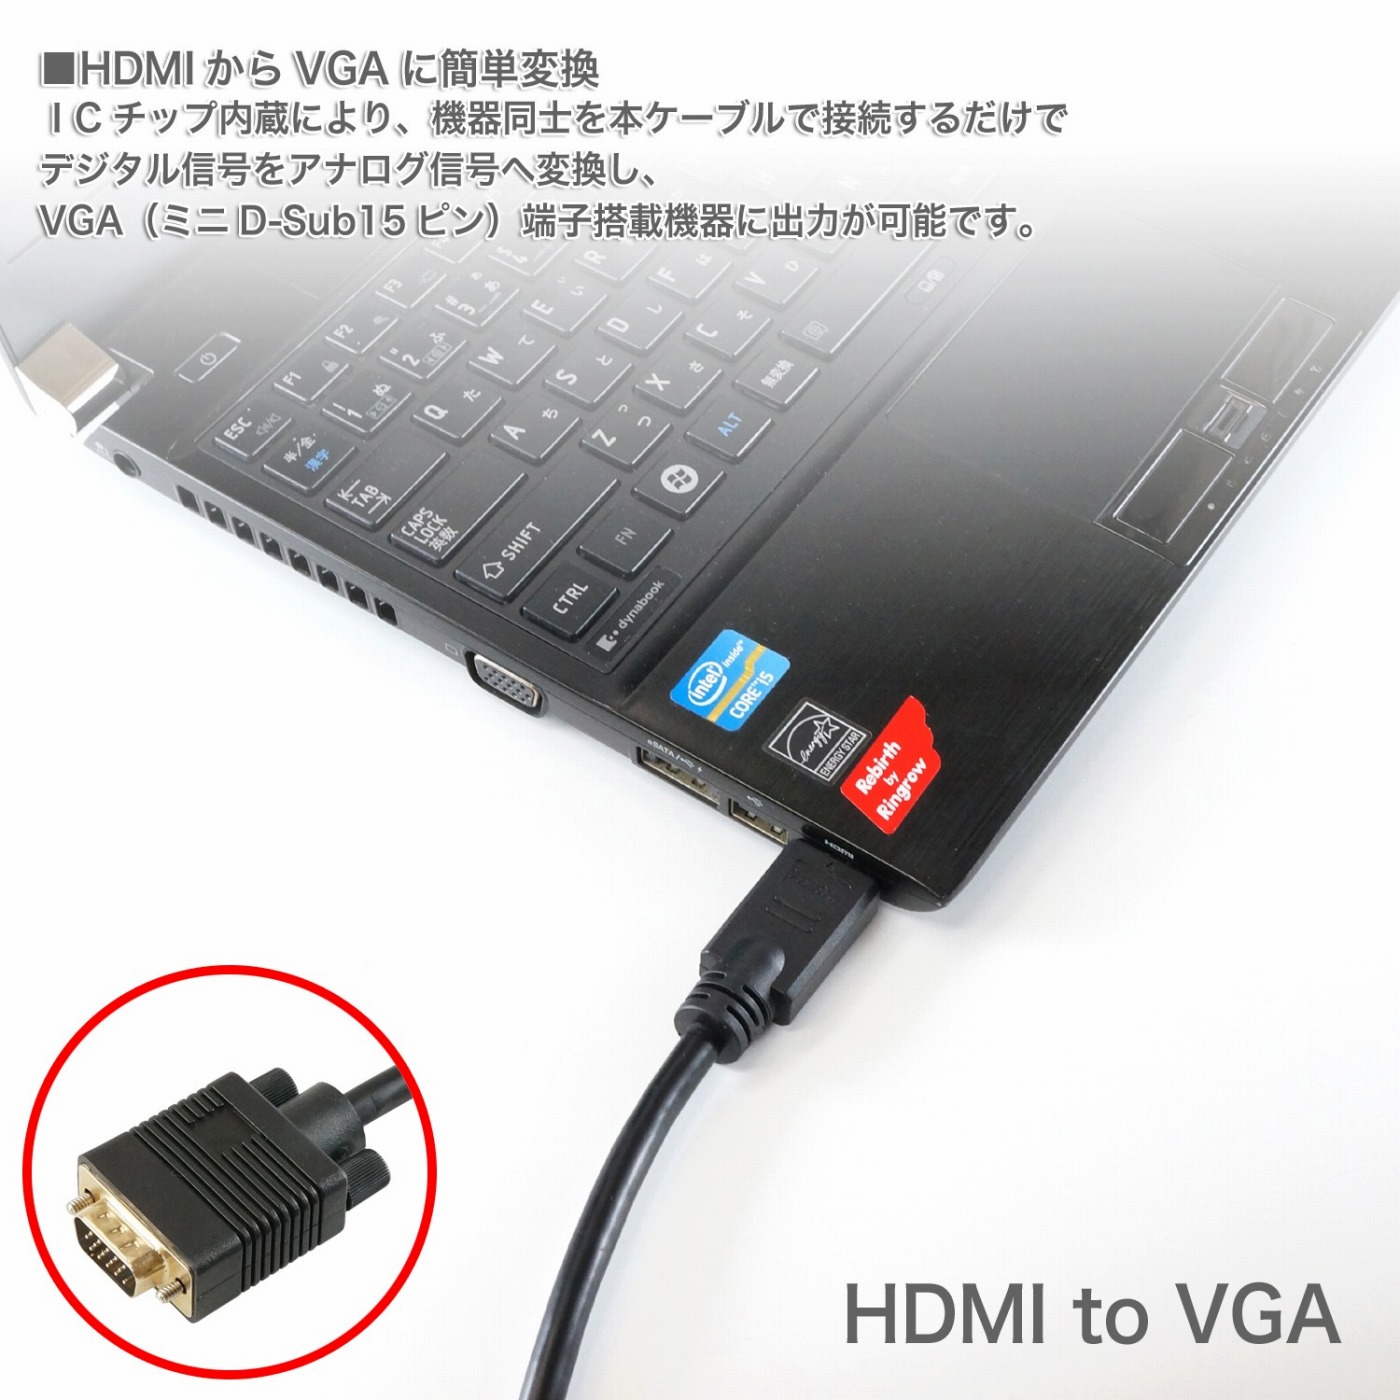 HDMIからVGAに簡単変換 HDMI→VGA変換ケーブルアダプタ | HORIC